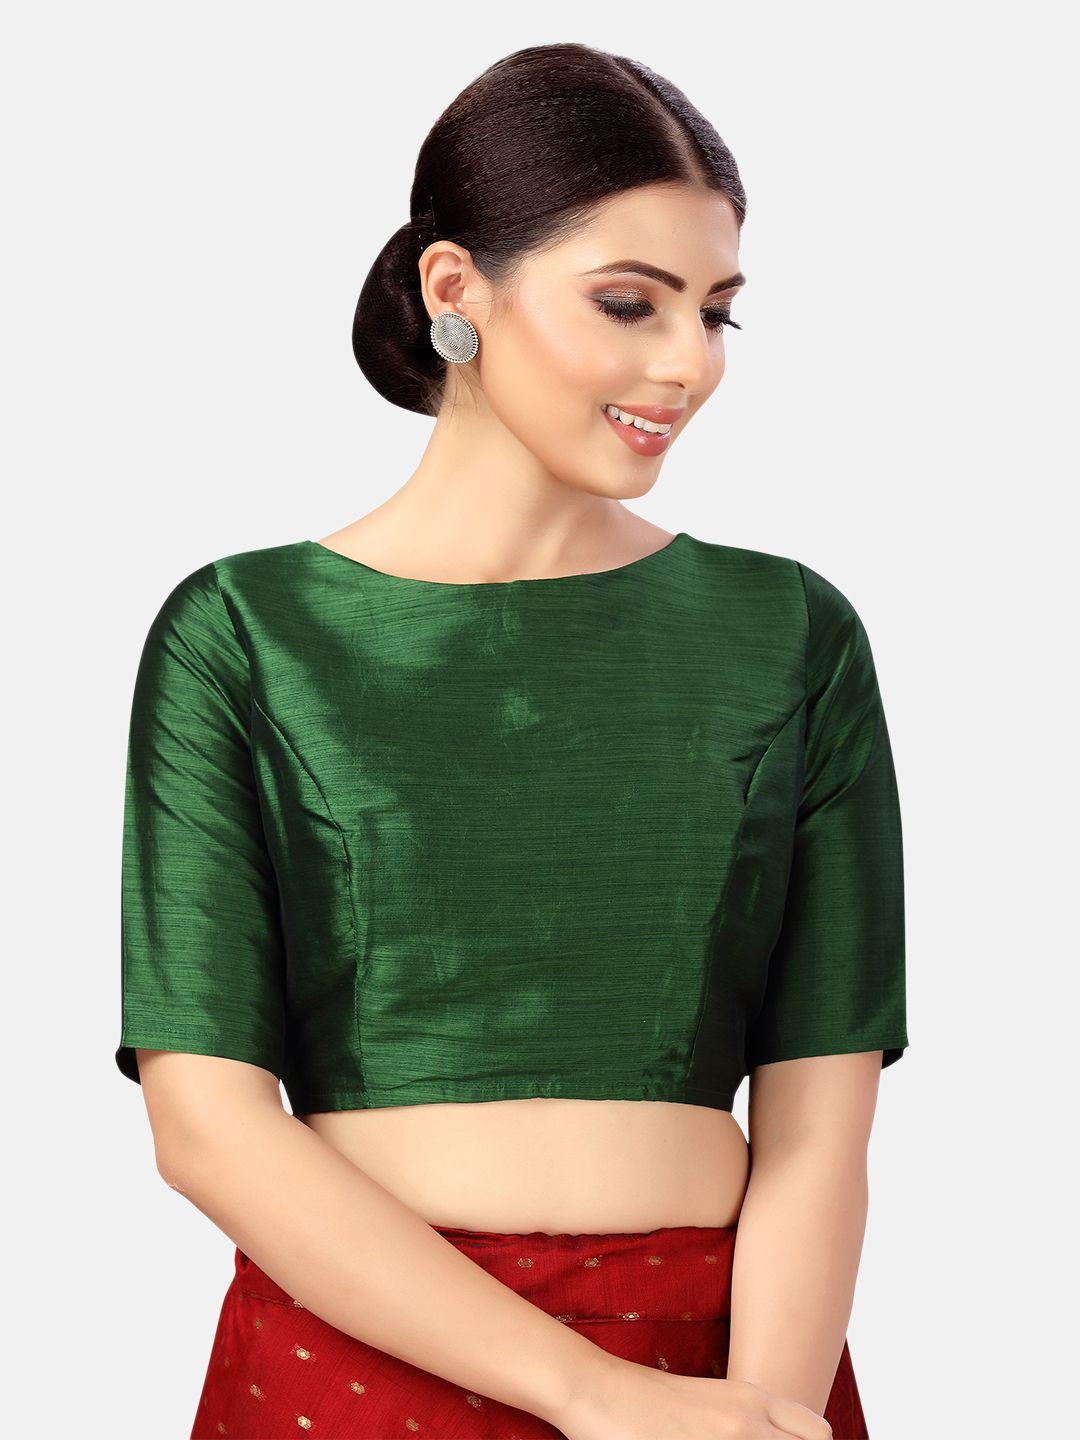 studio shringaar boat neck elbow length sleeves saree blouse